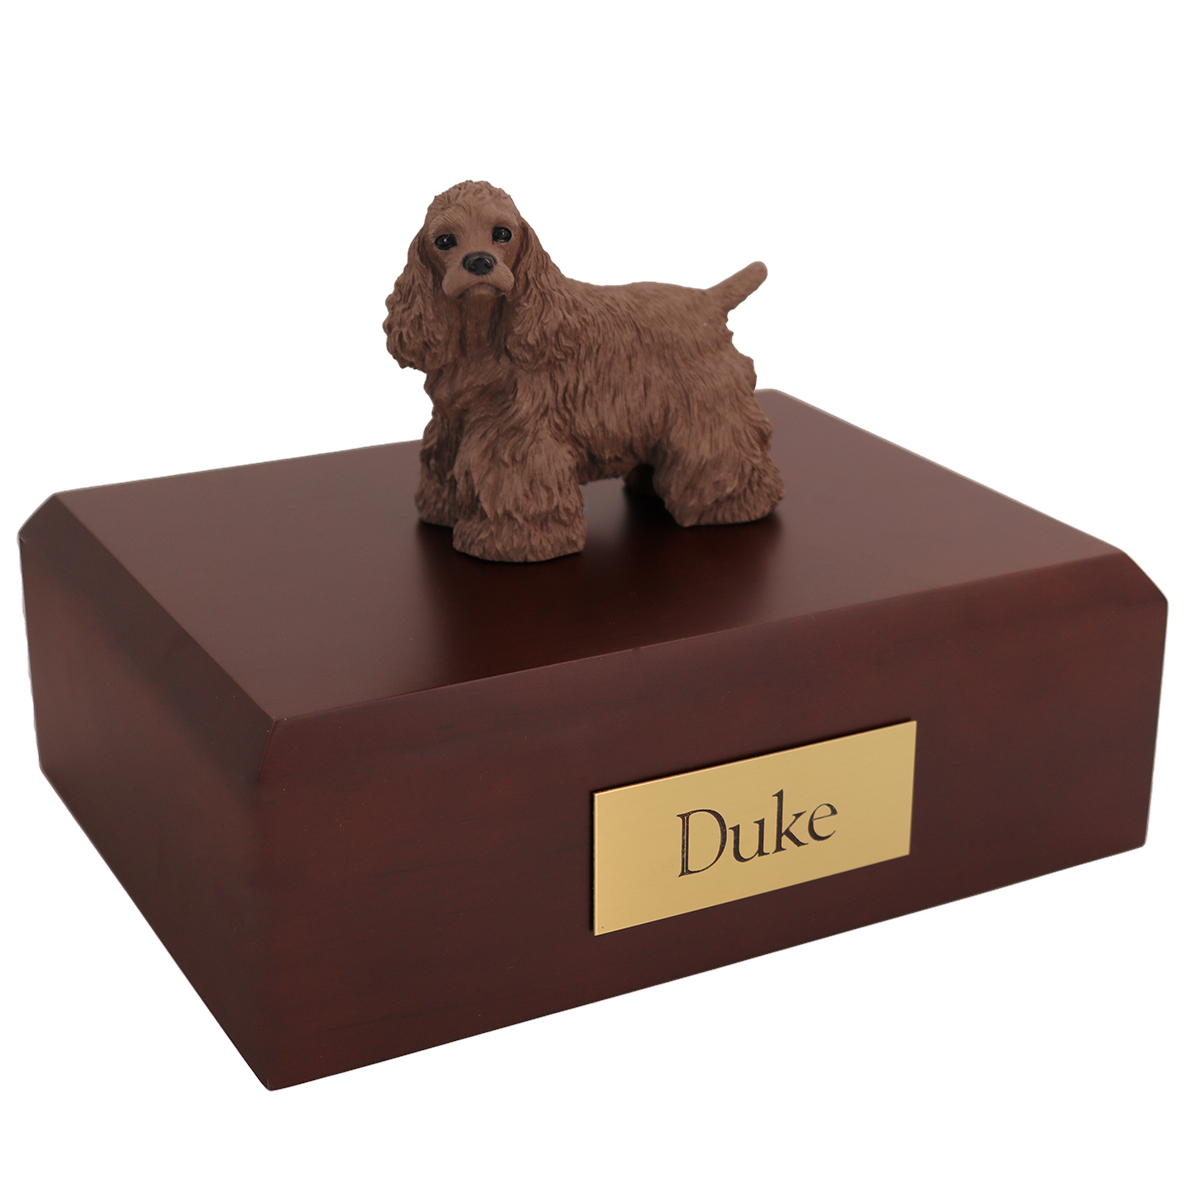 Dog, Cocker, Brown - Figurine Urn